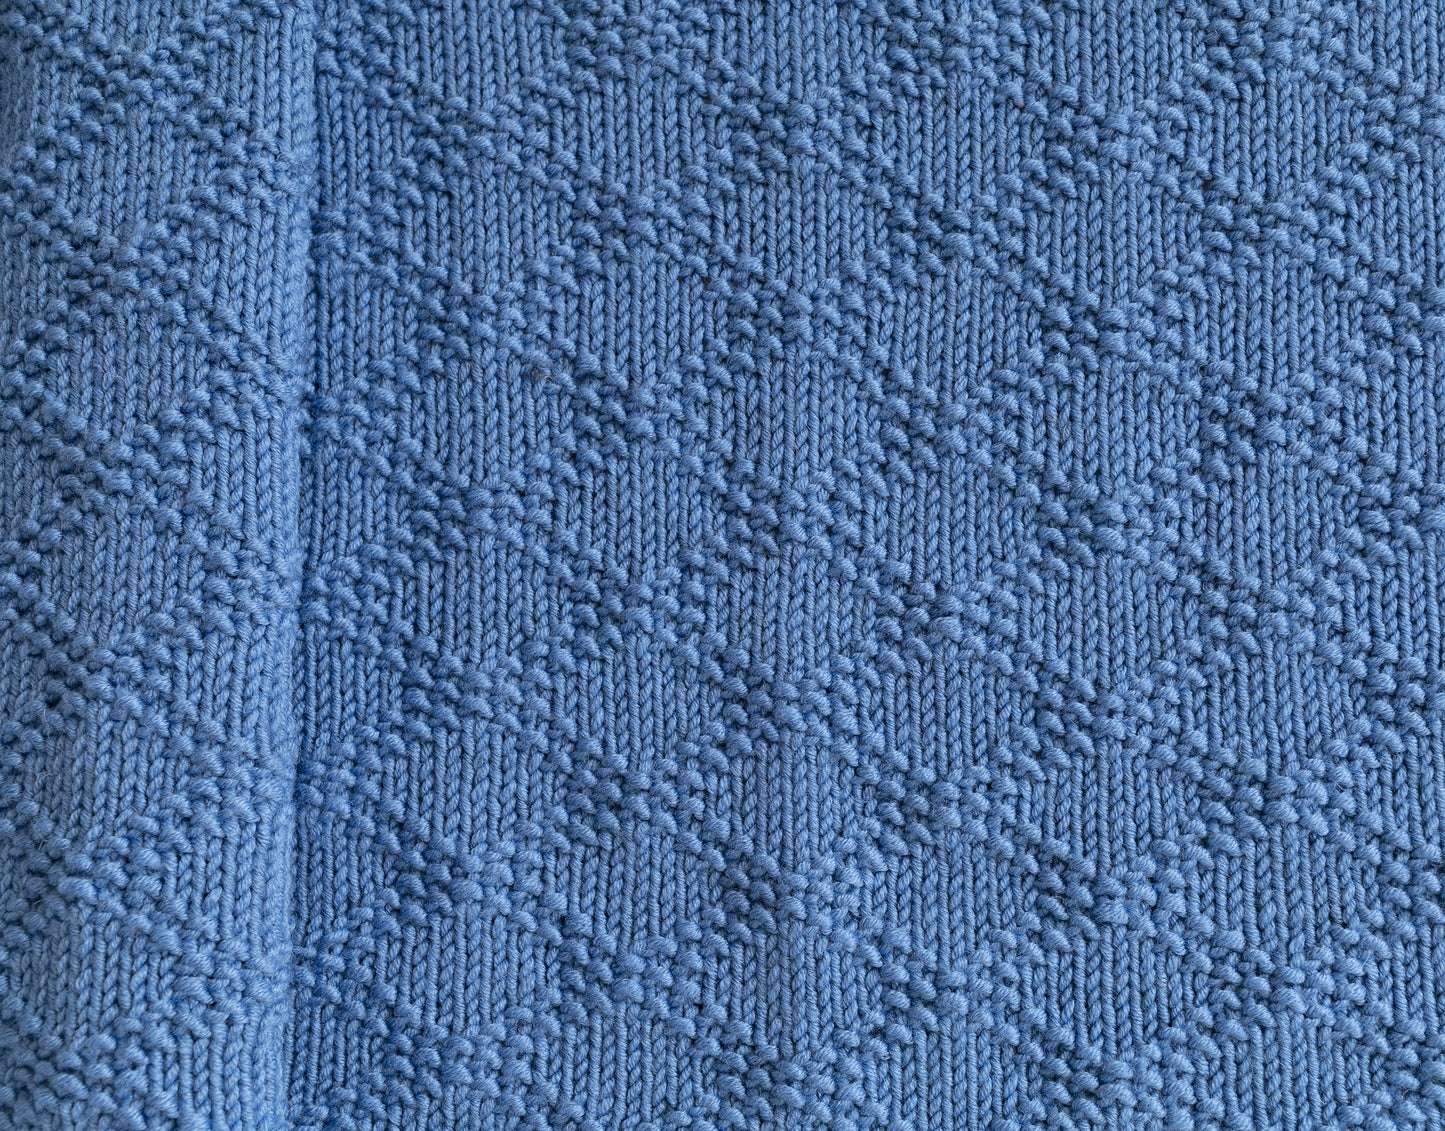 Texture of Blue merino wool hand-knitted blanket in Charles Brocade pattern